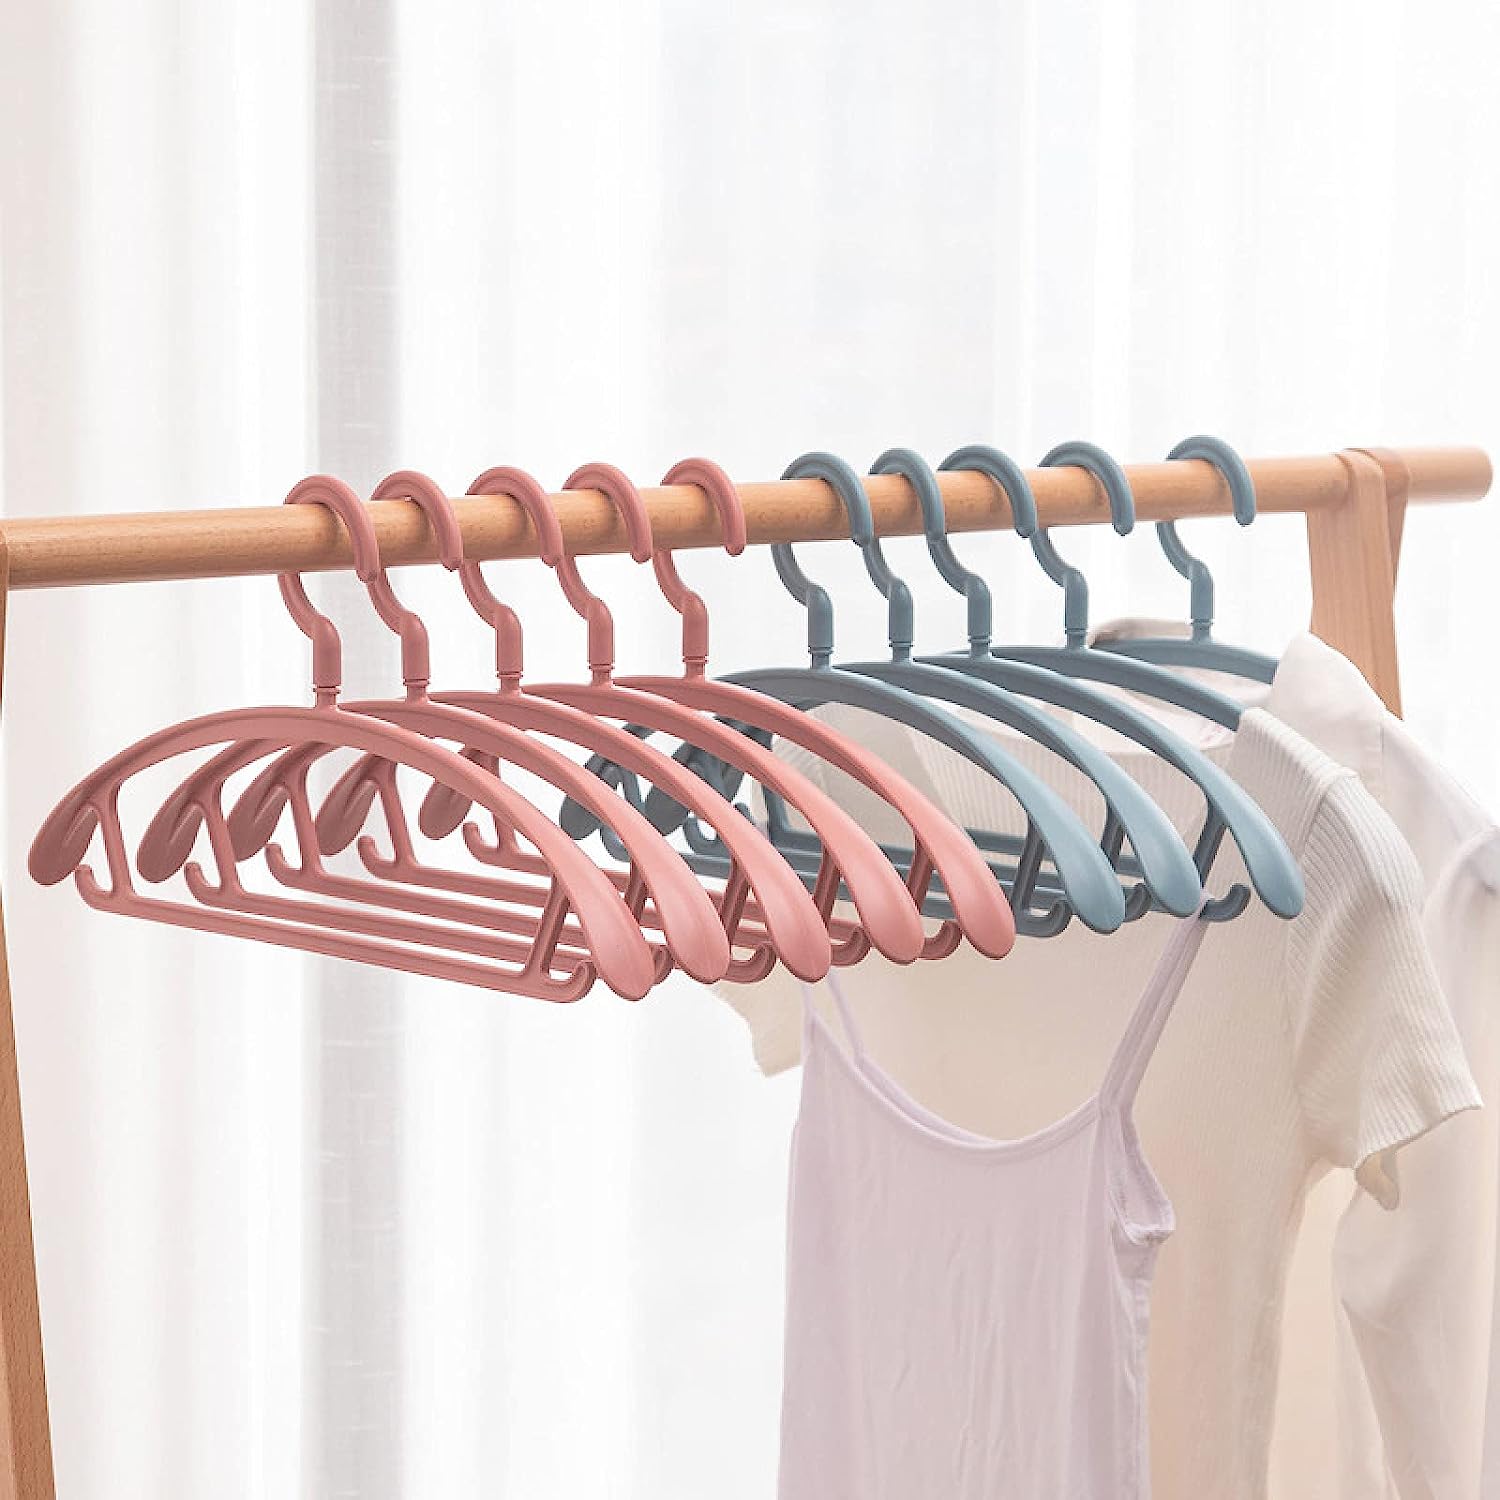 Plastic Hangers, Clothes Hangers - Lightweight Space Saving Hangers - Standard Hangers for Clothes - Durable, Slim & Sleek Hangers (10pc)